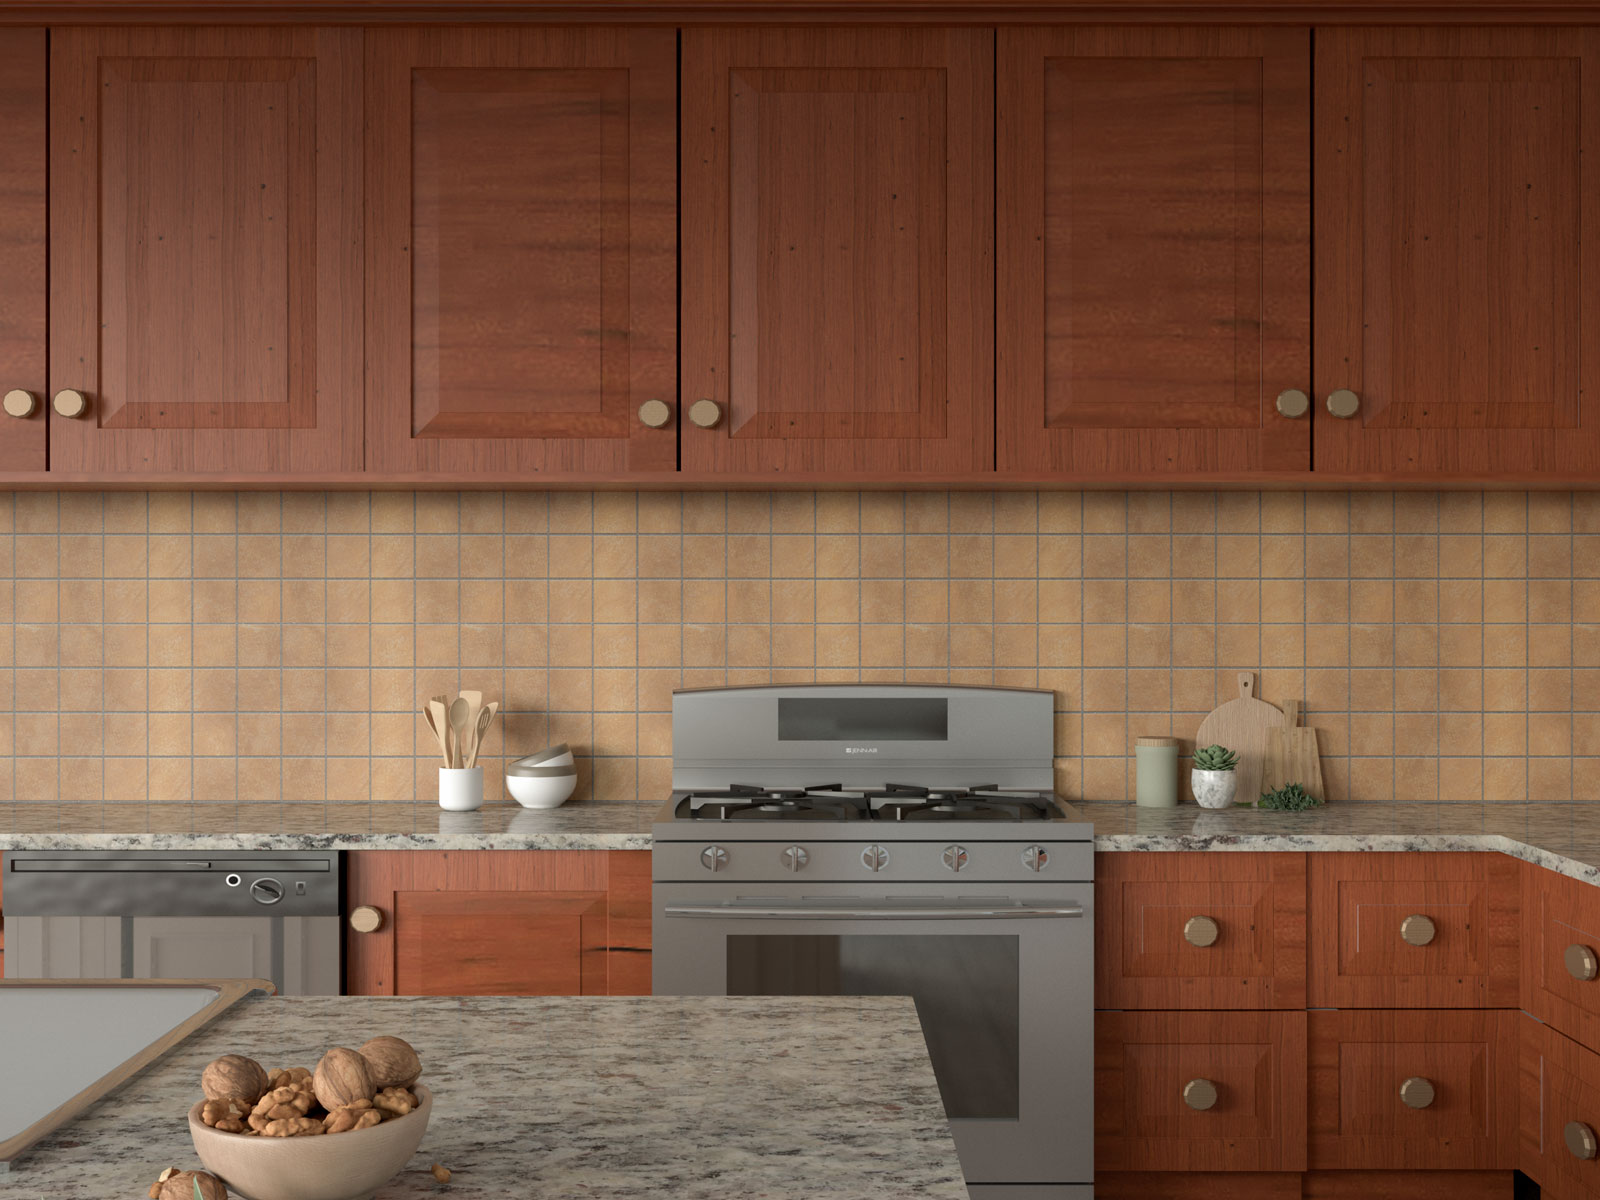 Cherry kitchen cabinets with terracotta backsplash